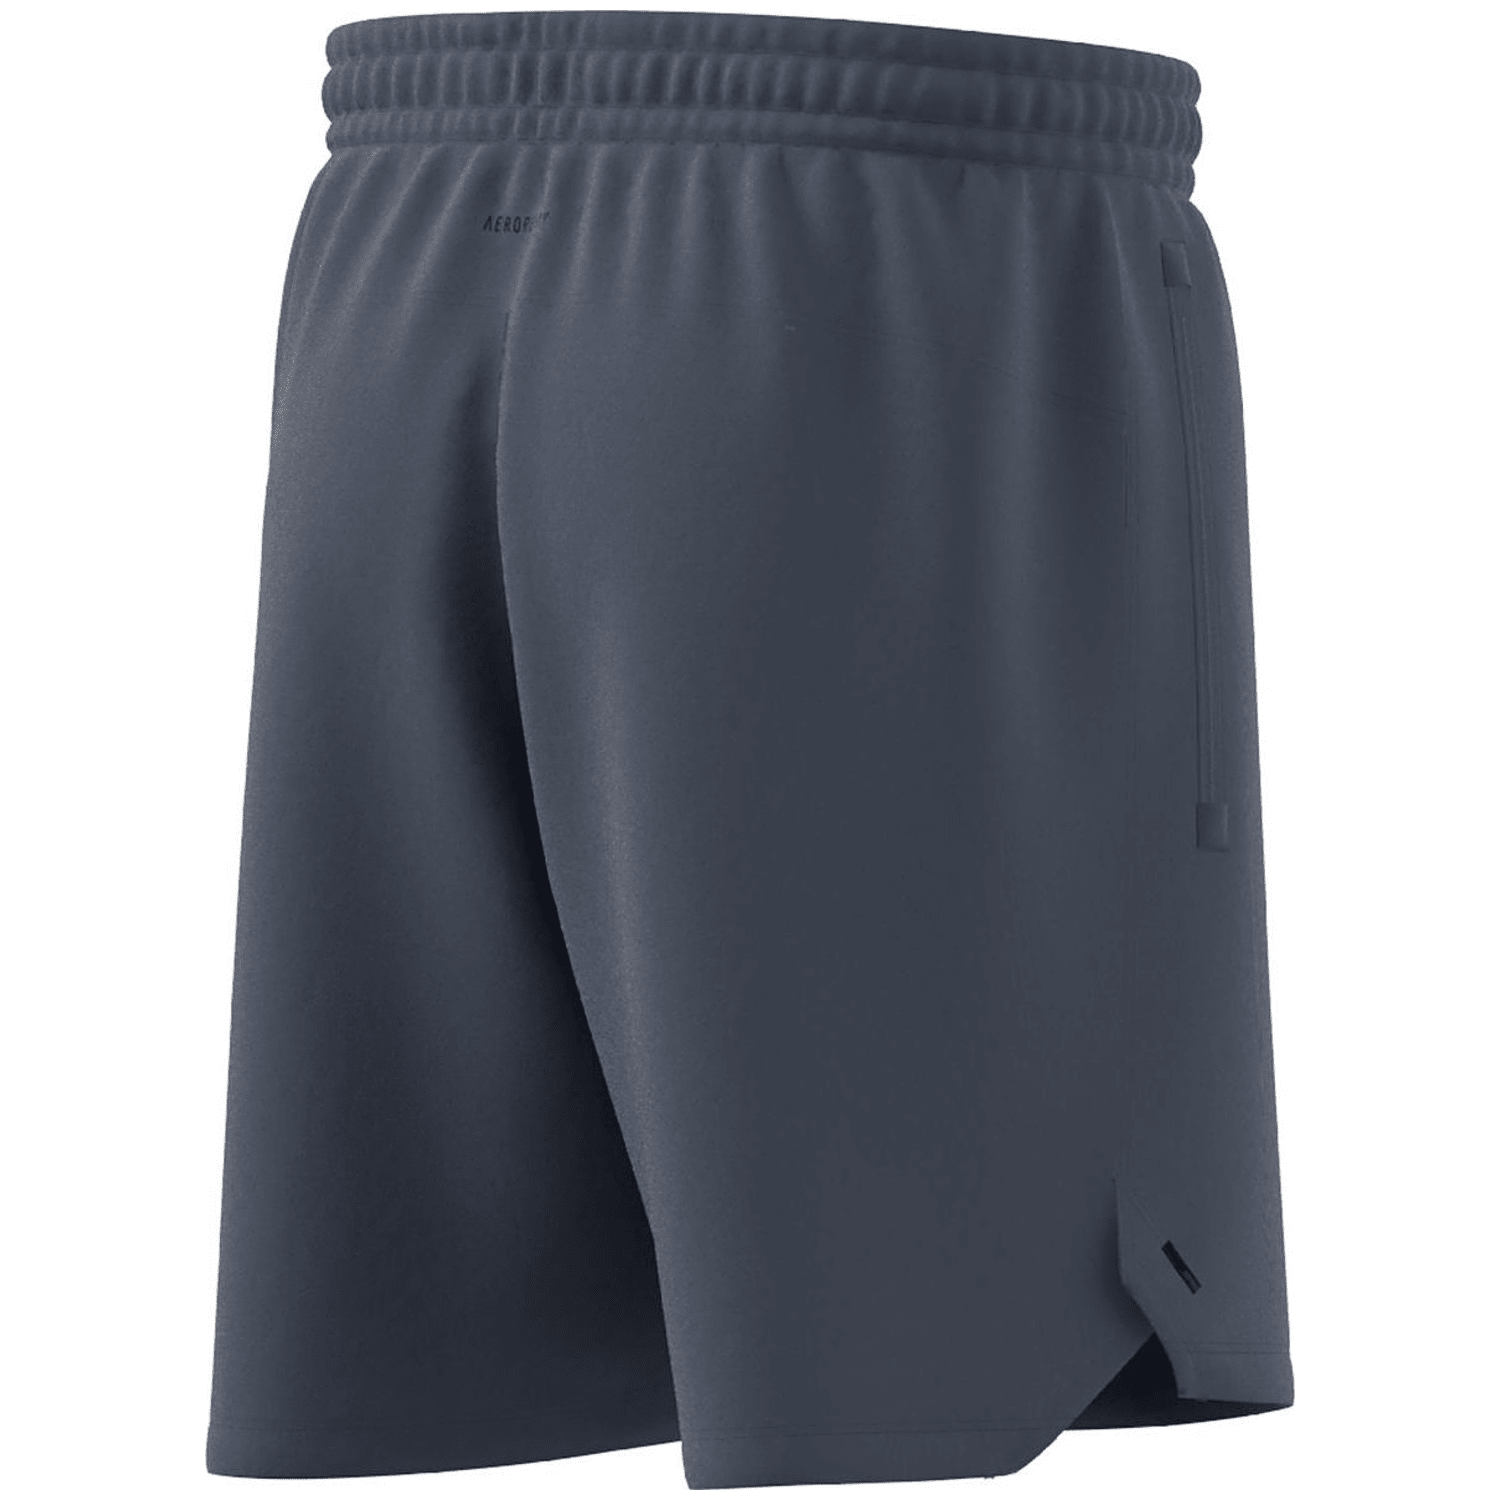 Adidas Workout Logo Knit Shorts 7inch Herren